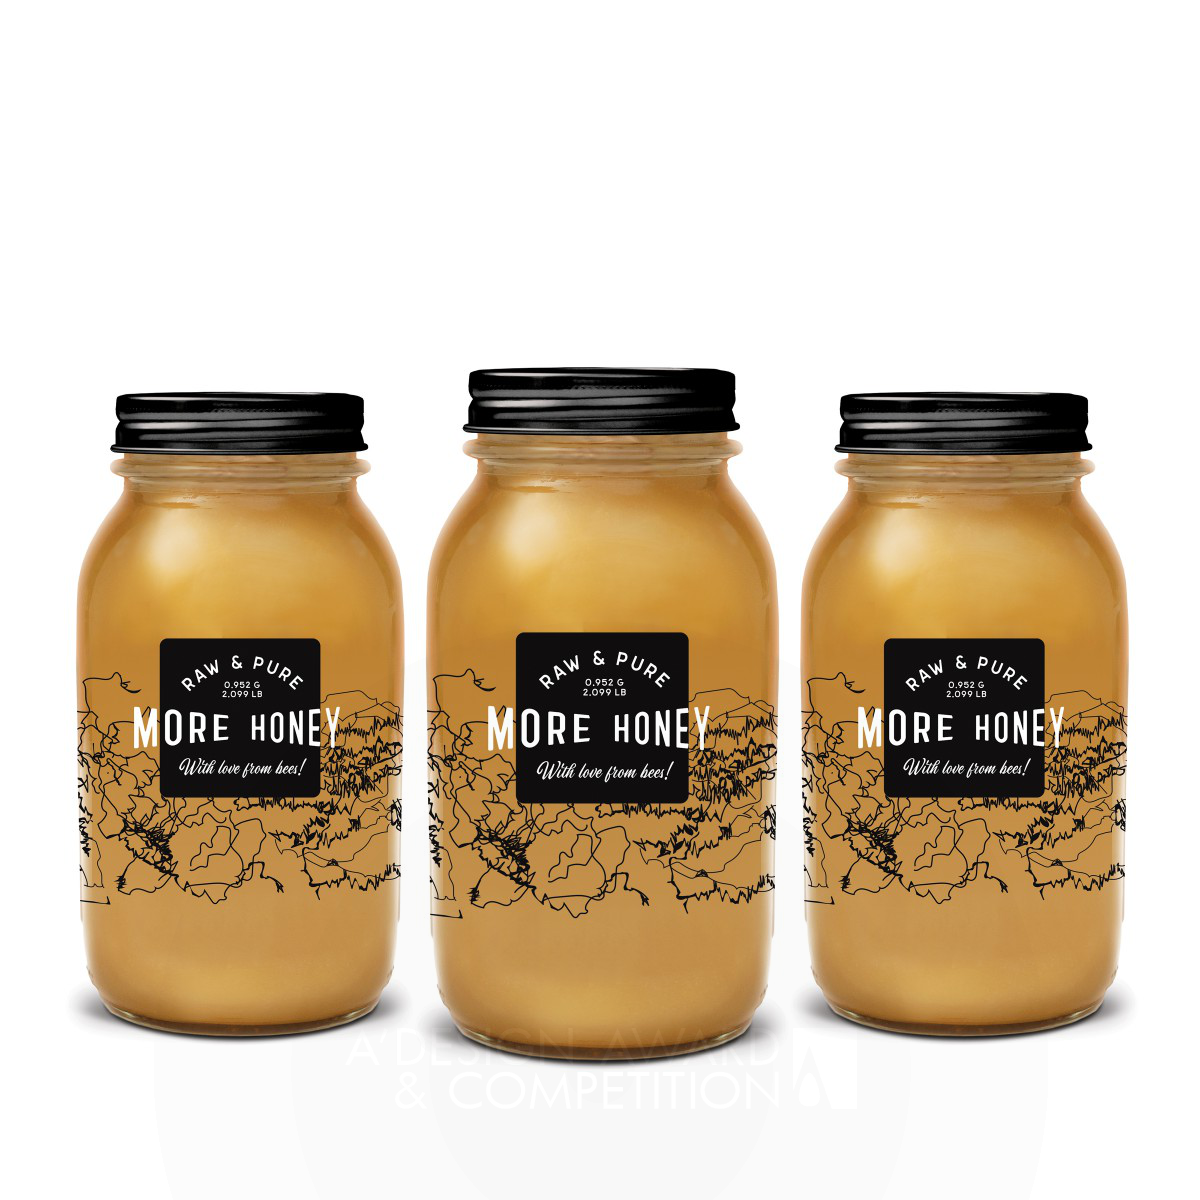 Much honey. Honey package Design. More Honey. Mountain Honey brand. Design about Honey.